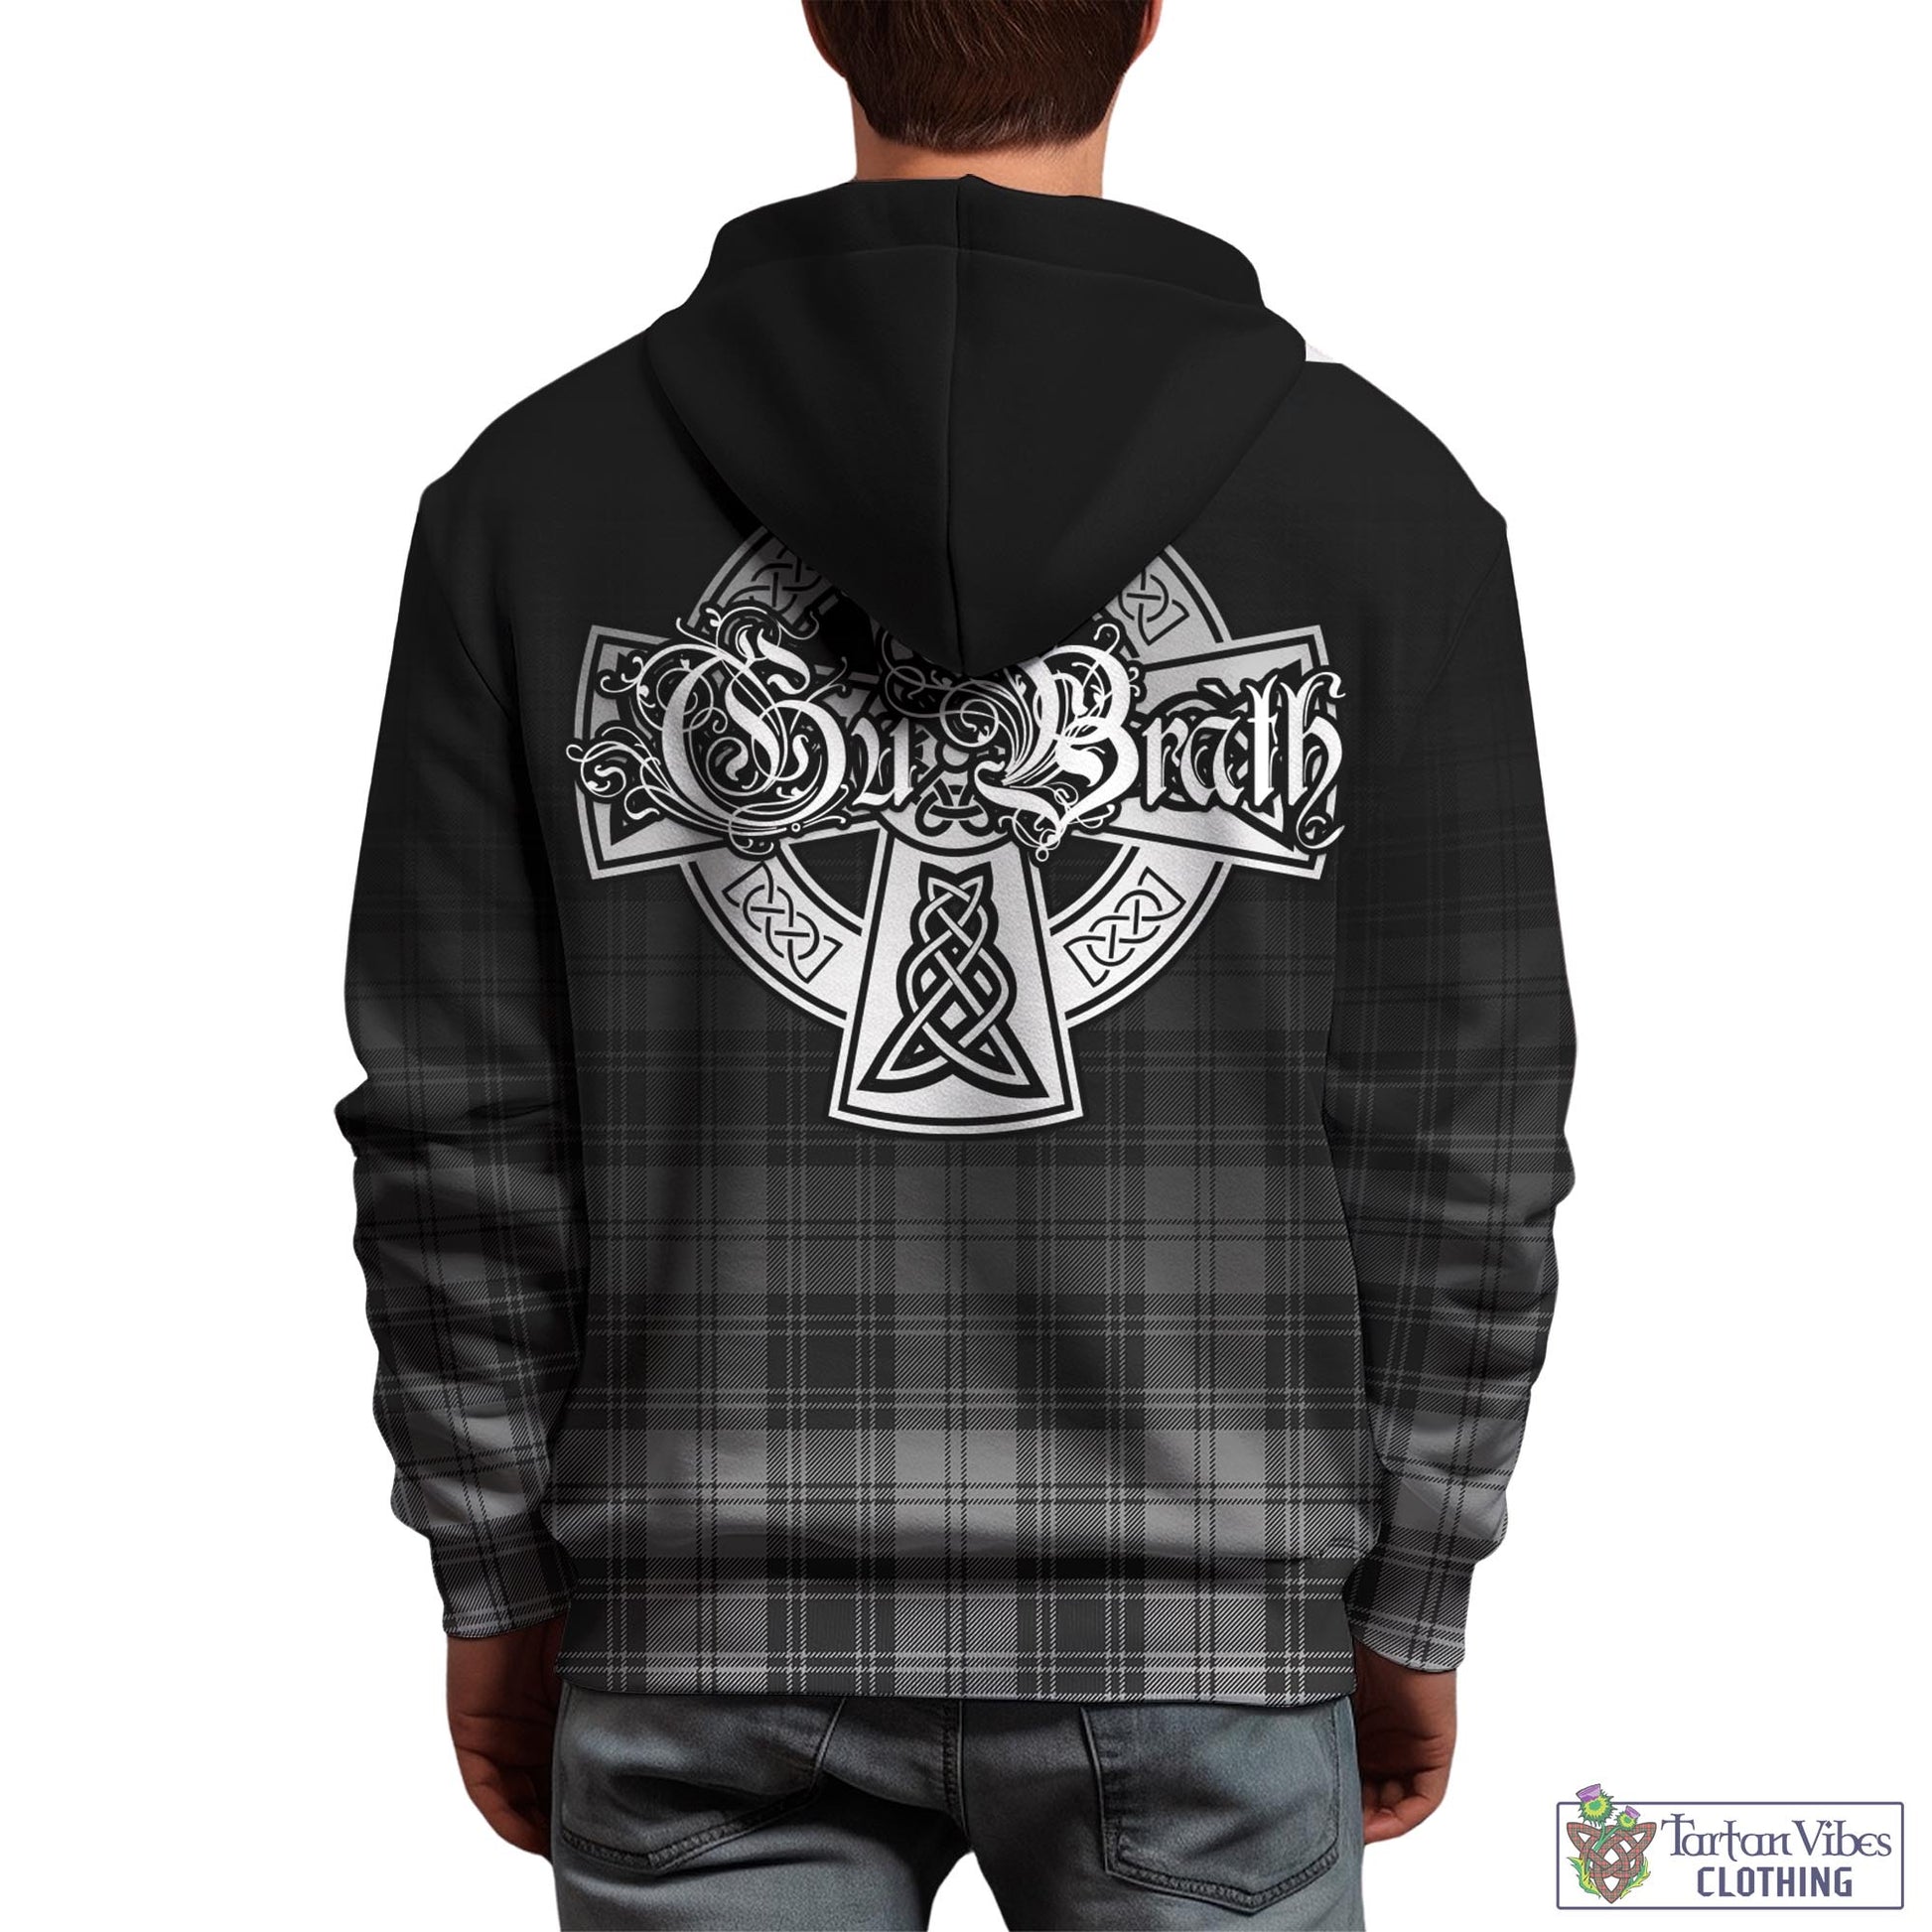 Tartan Vibes Clothing Glen Tartan Hoodie Featuring Alba Gu Brath Family Crest Celtic Inspired